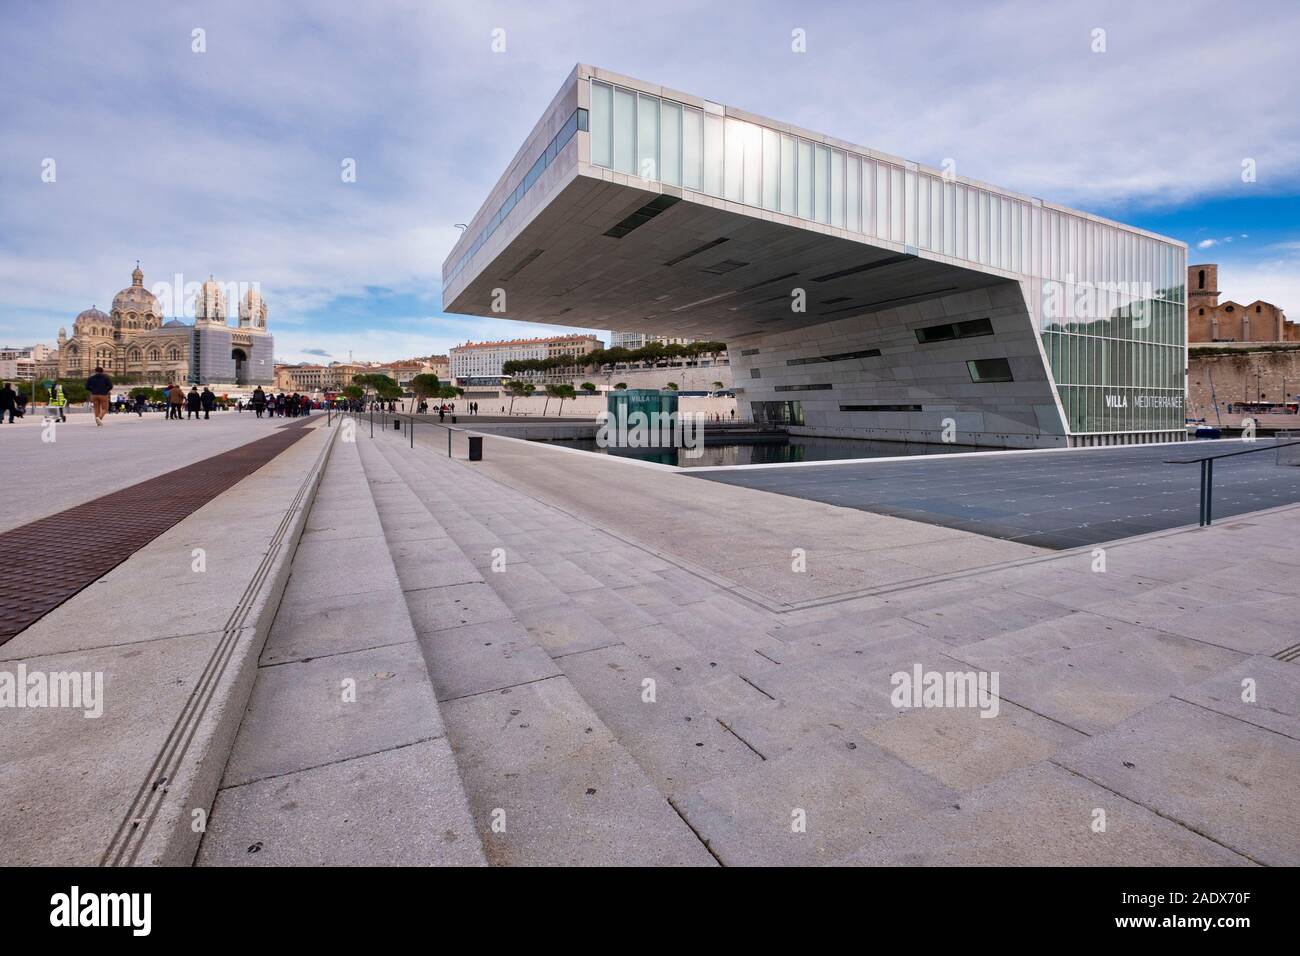 Villa Méditerranée cultural centre designed by Milanese architect Stefano Boeri in Marseille, France, Europe Stock Photo